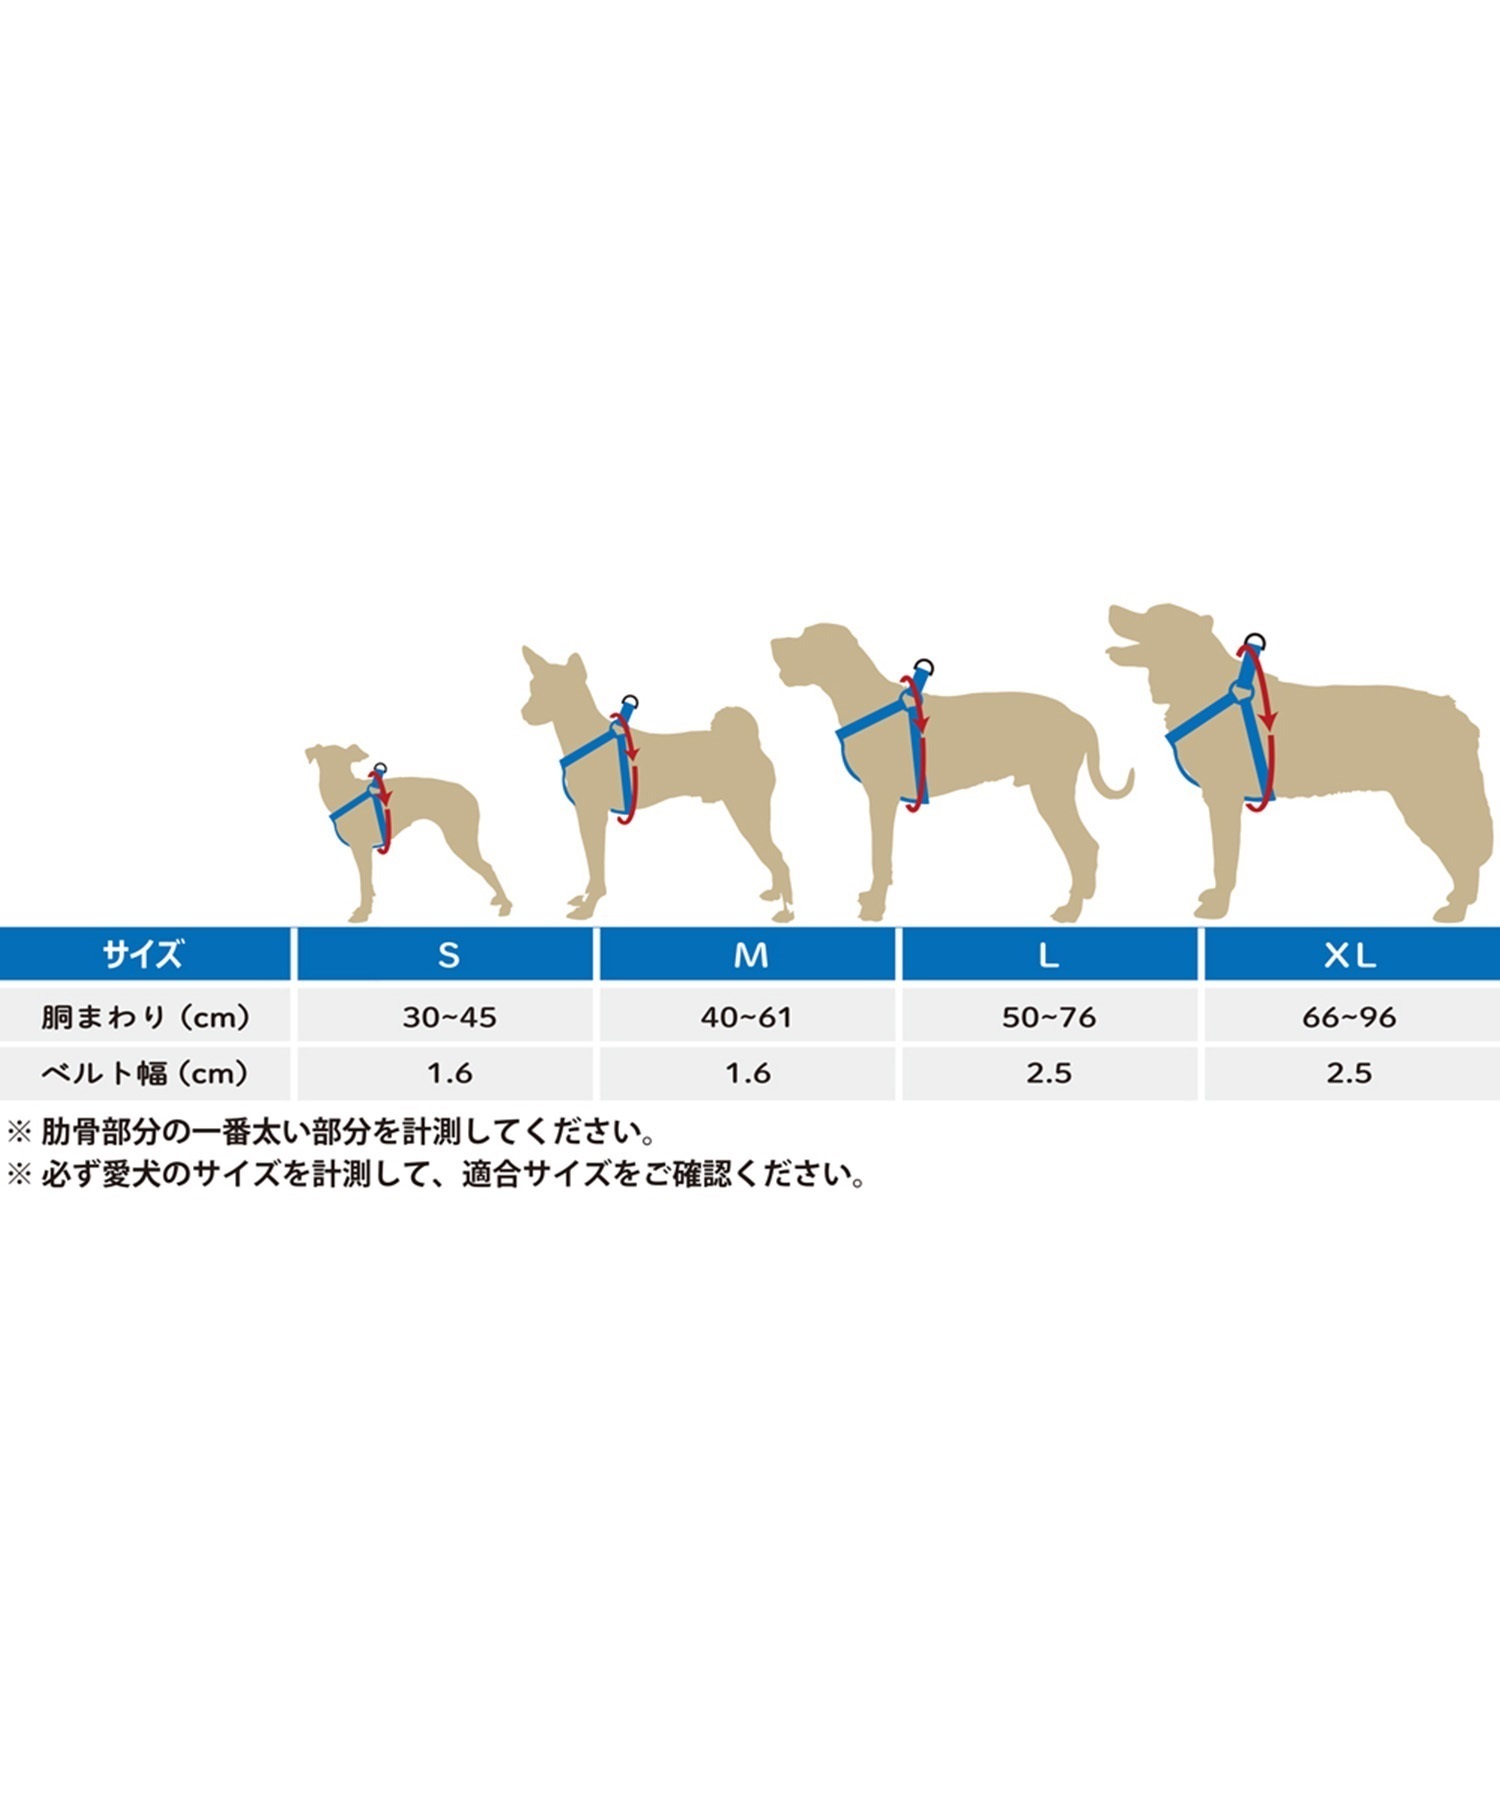 WOLFGANG ウルフギャング 犬用 ハーネス ModernCanvas Harness Mサイズ 小型犬用 中型犬用 胴輪 モダンキャンバス グリーン系 WH-002-103(GR-M)